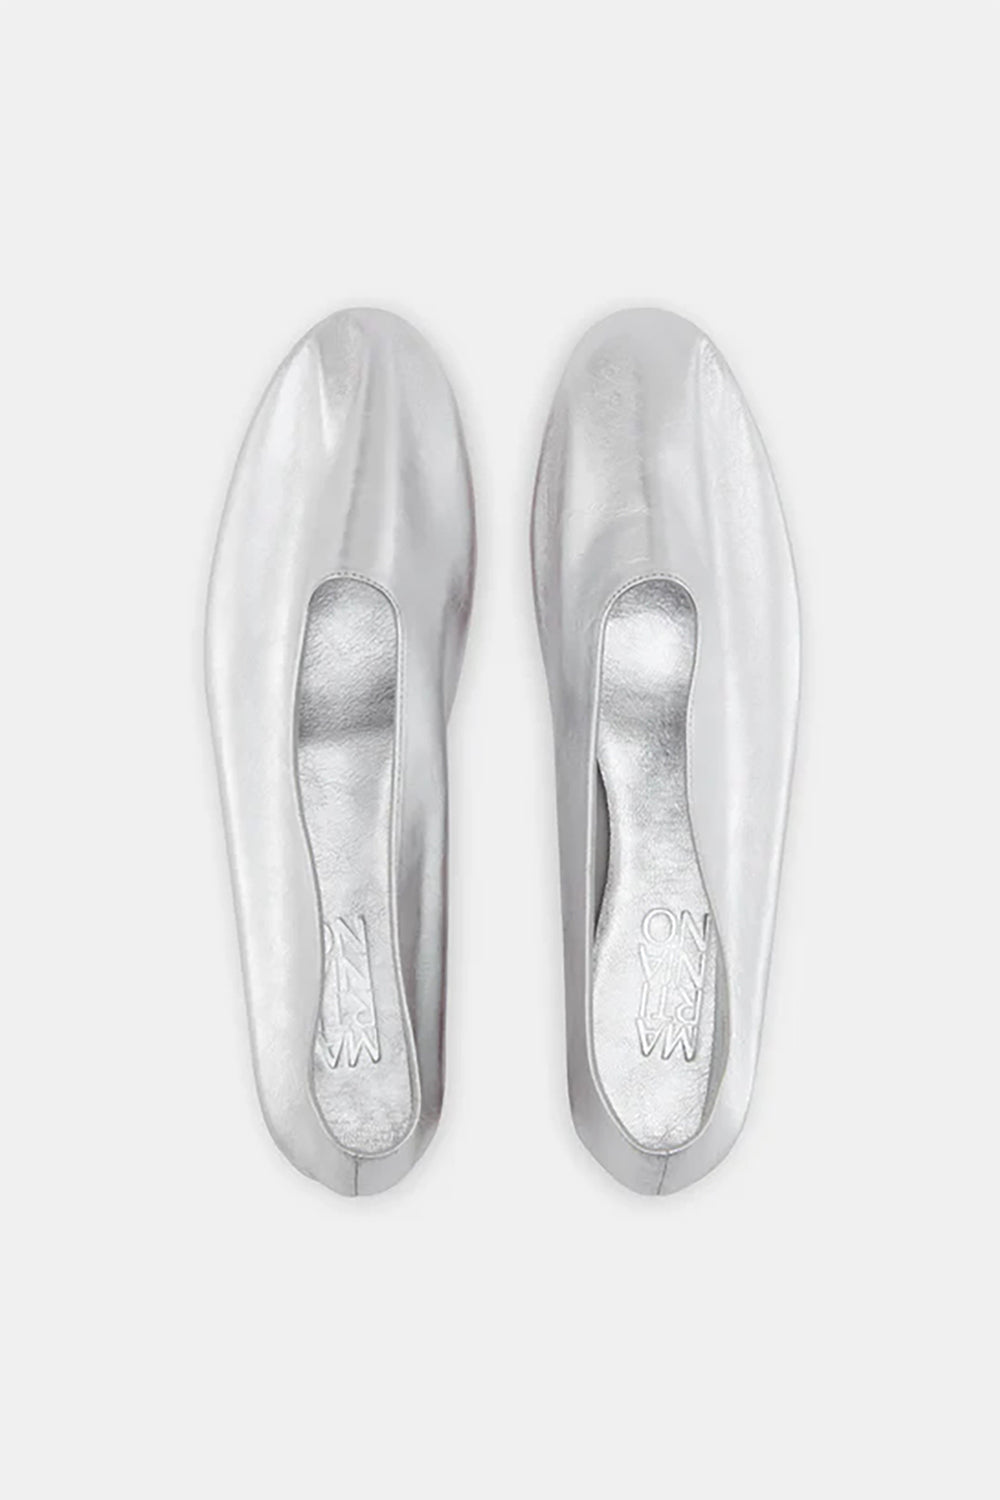 Martiniano Glove Shoe in Silver